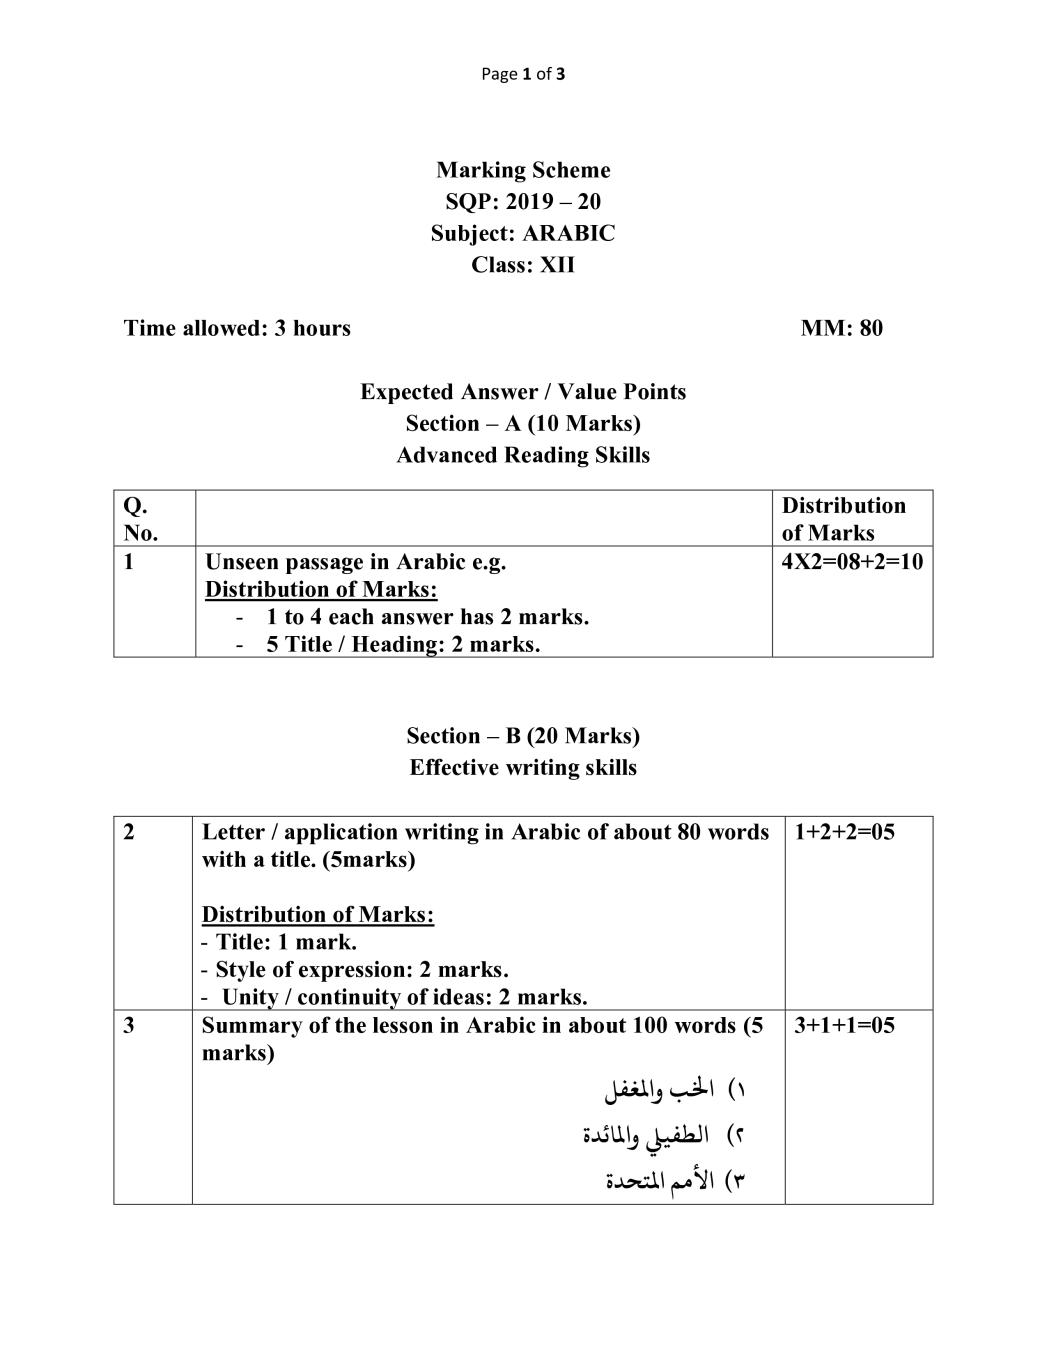 CBSE Class 12 Marking Scheme 2020 for Arabic - Page 1